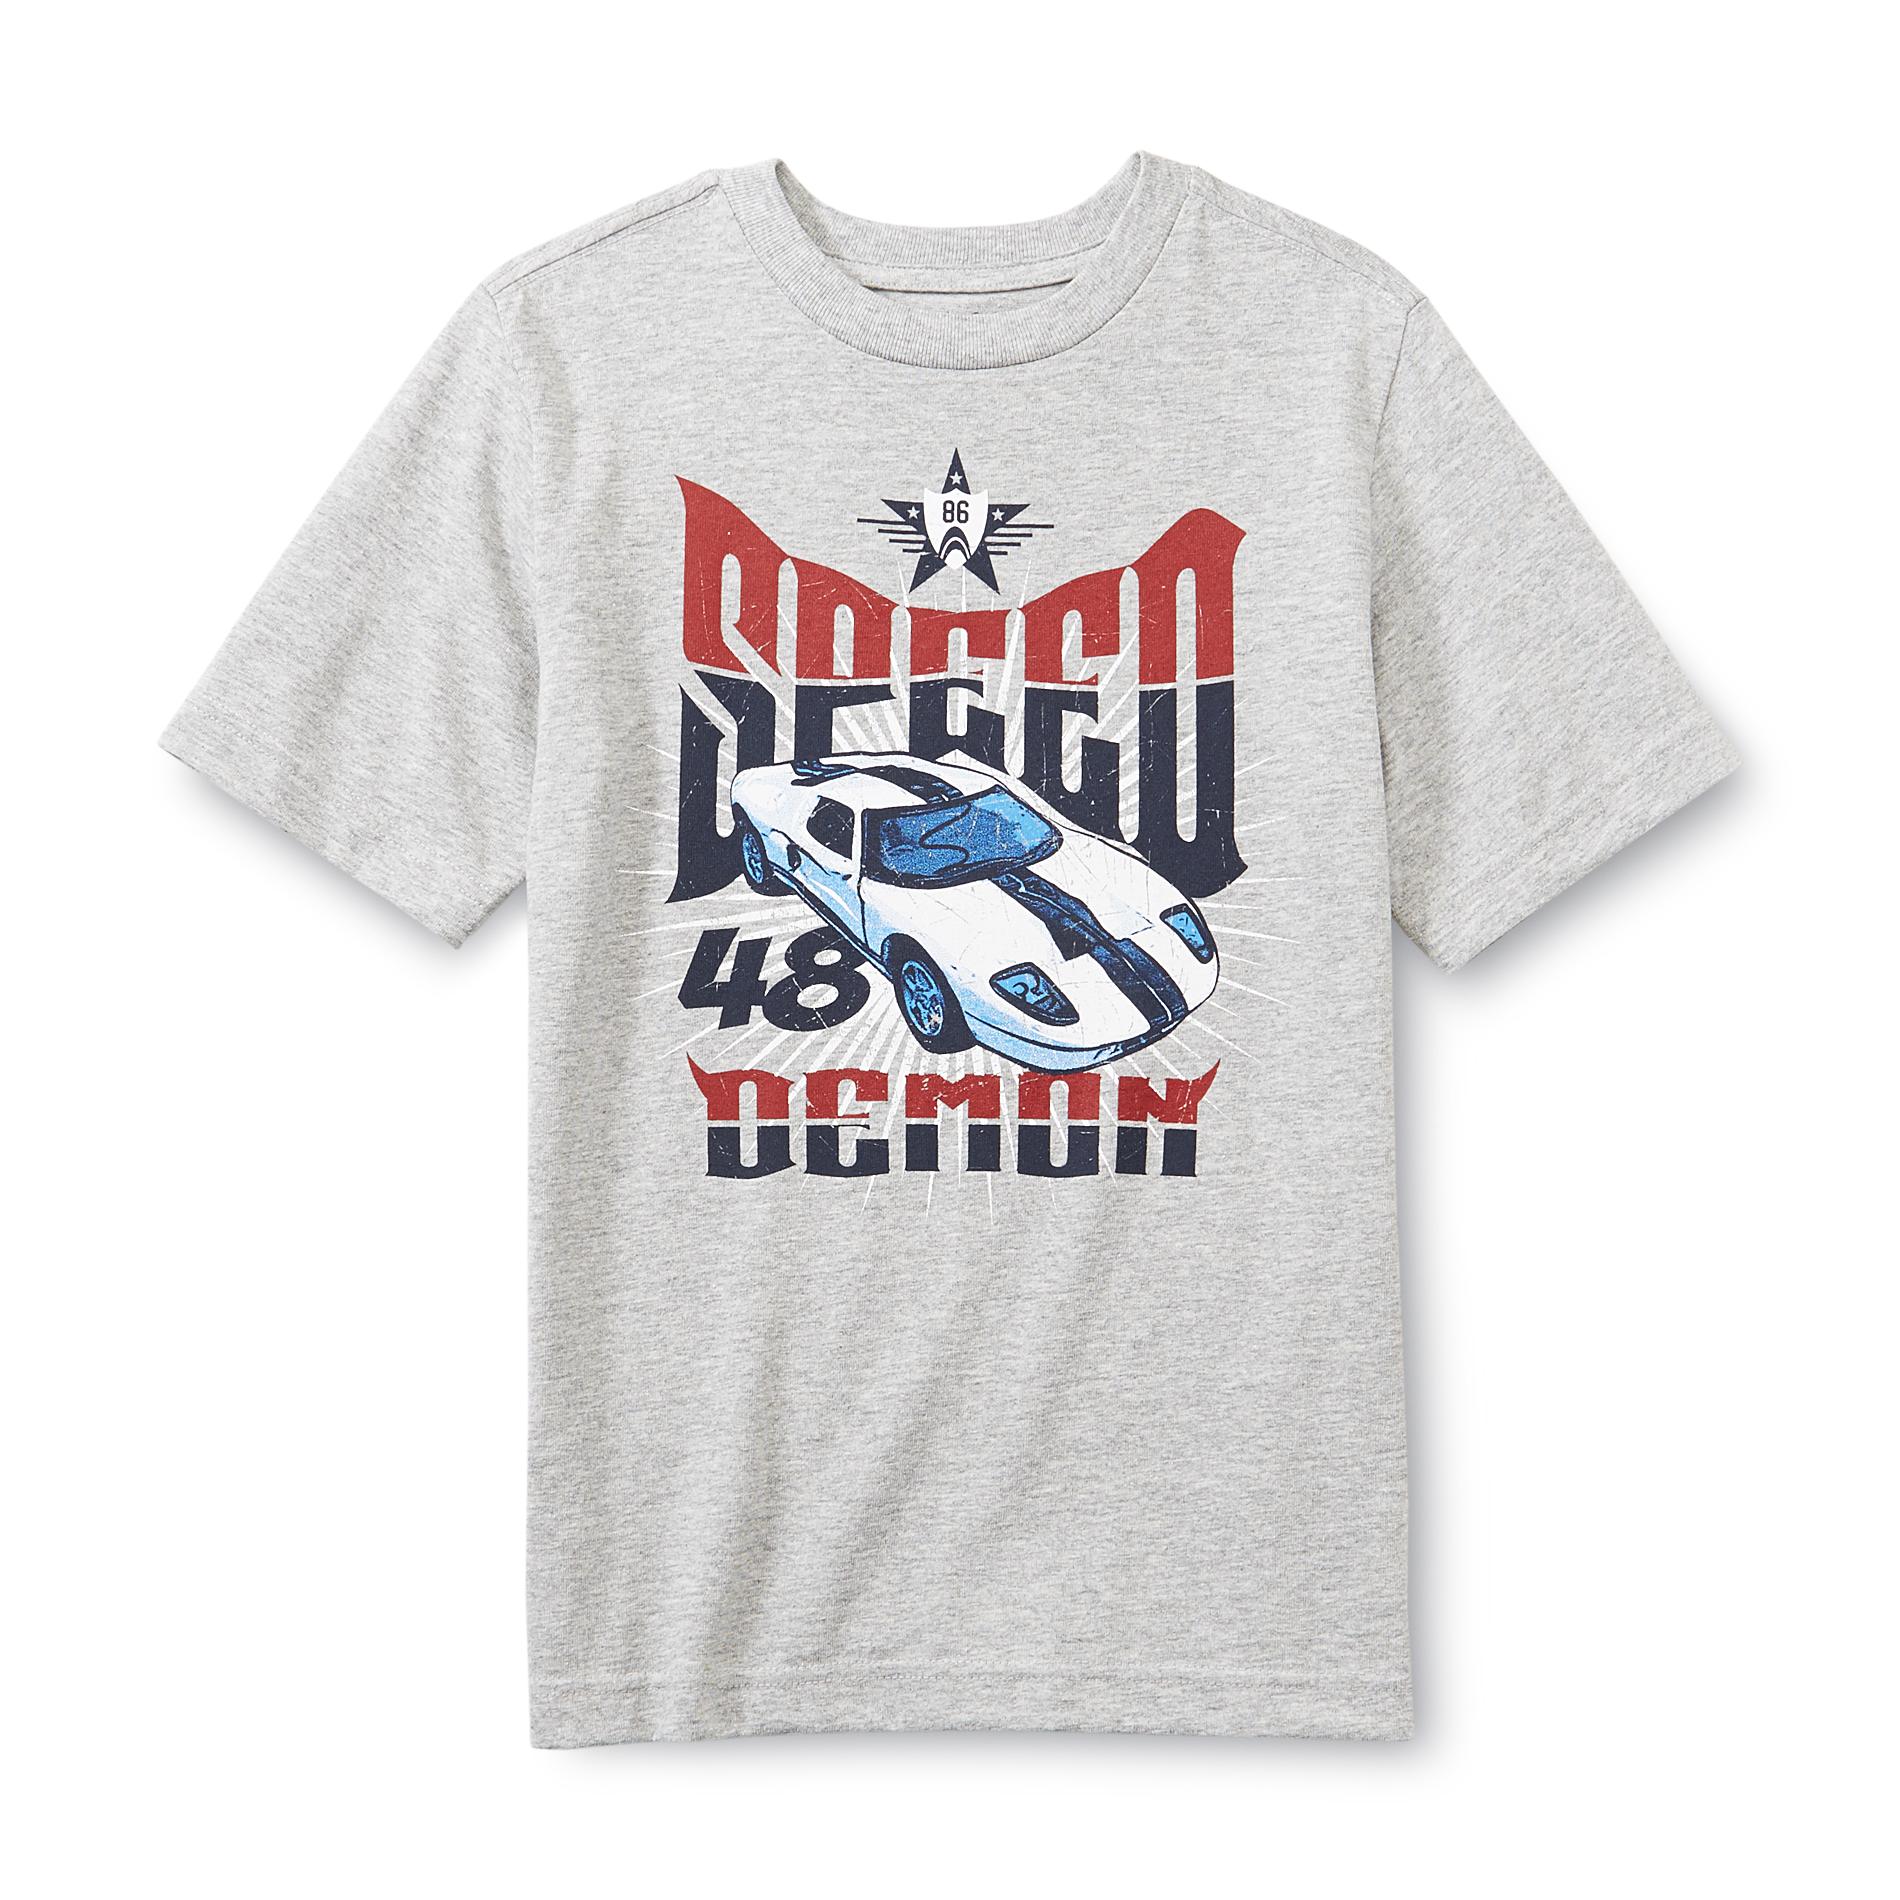 Basic Editions Boy's Graphic T-Shirt - Racecar